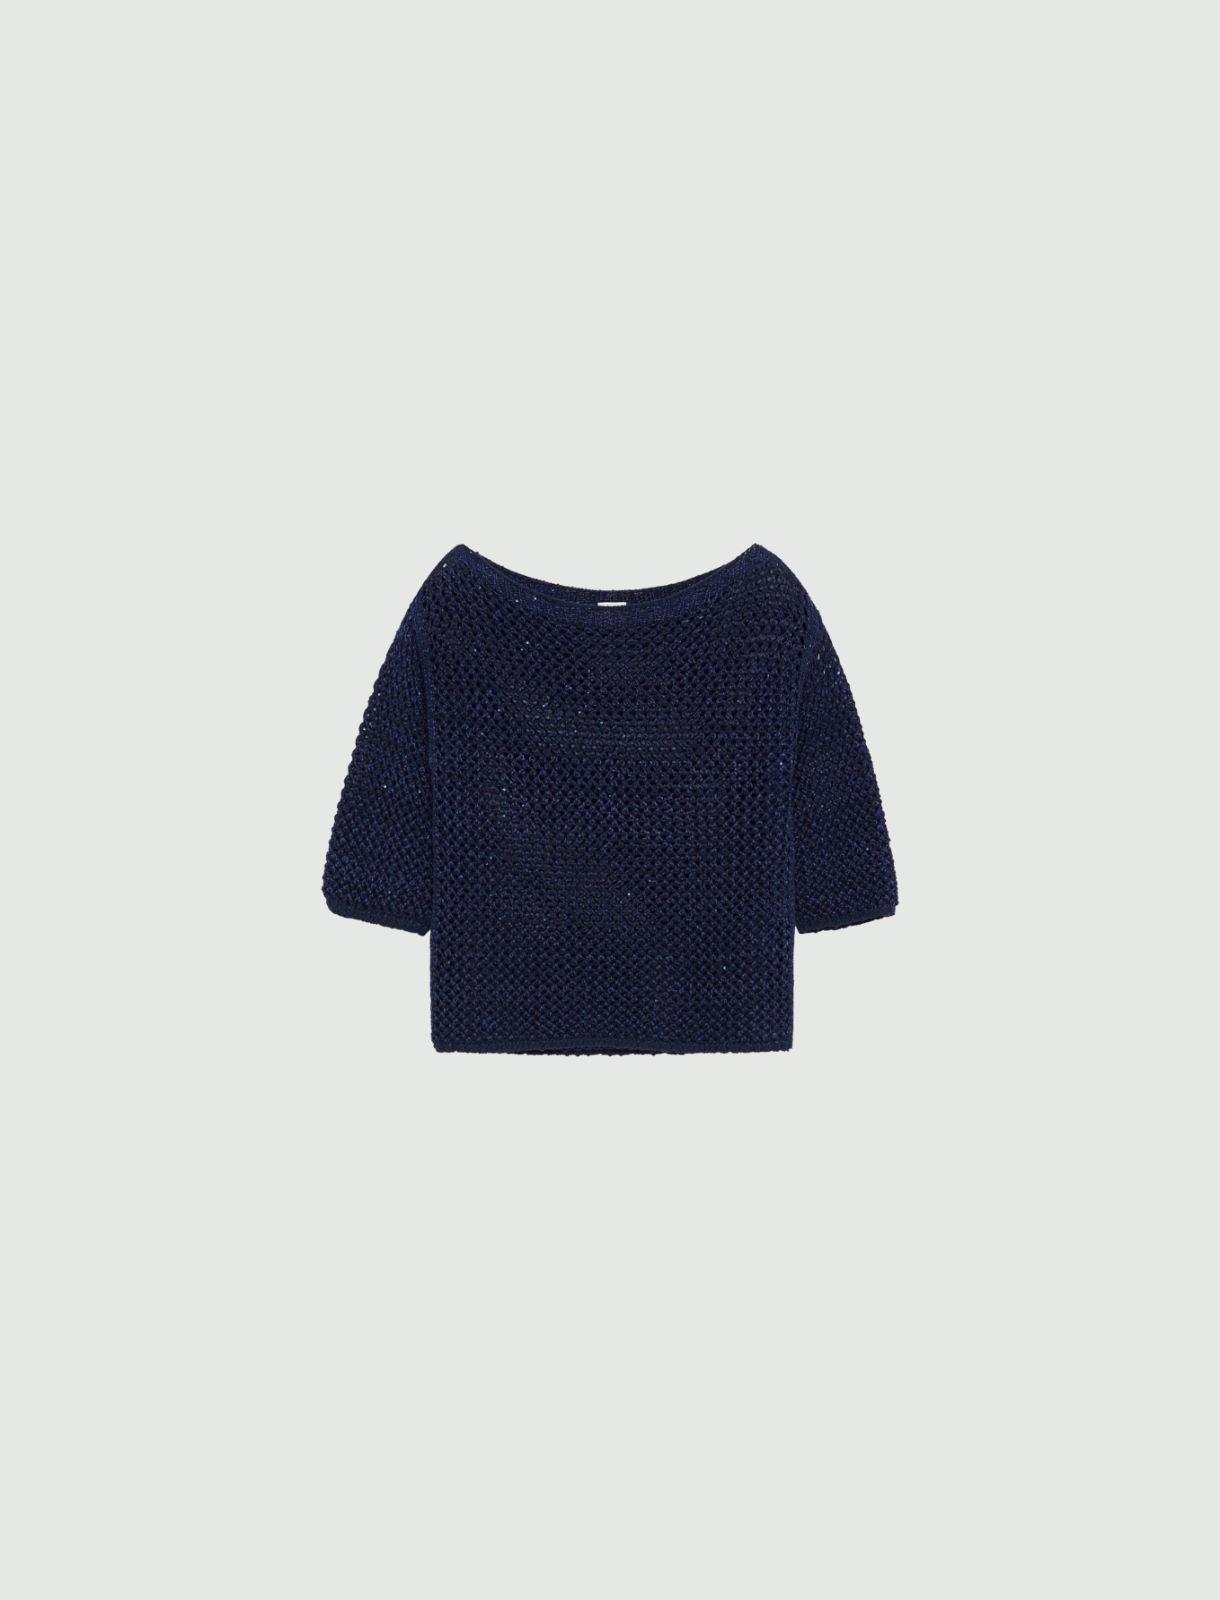 Cropped sweater - Midnightblue - Marella - 2